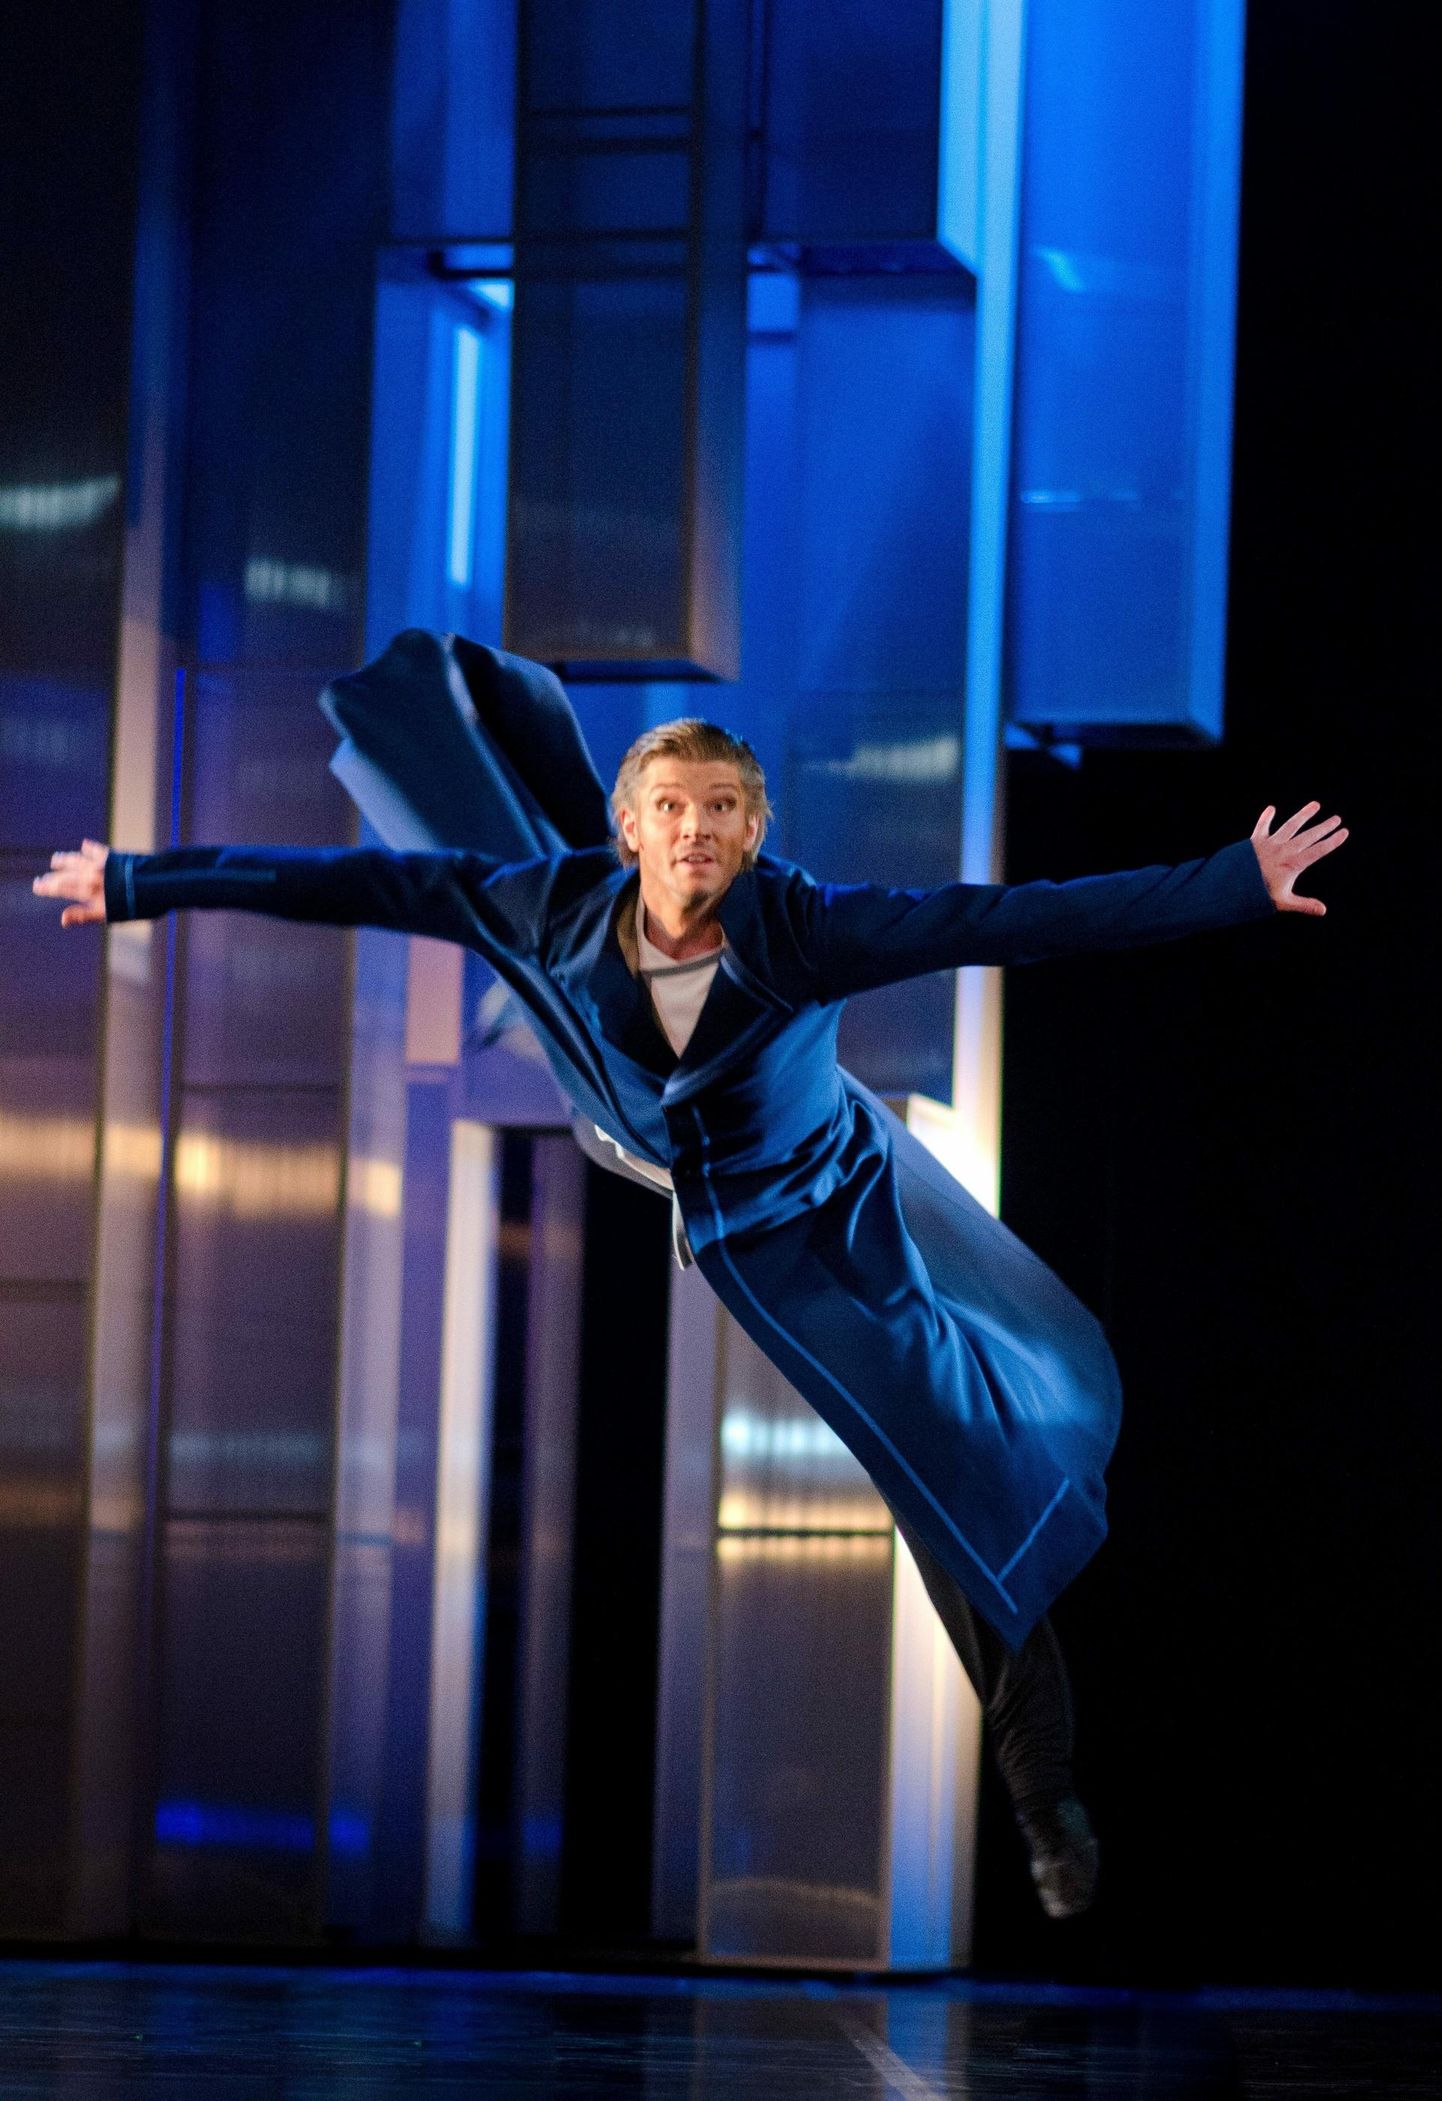 Deniss Klimuk tantsimas Estonia artistina «Krati» etenduses. 